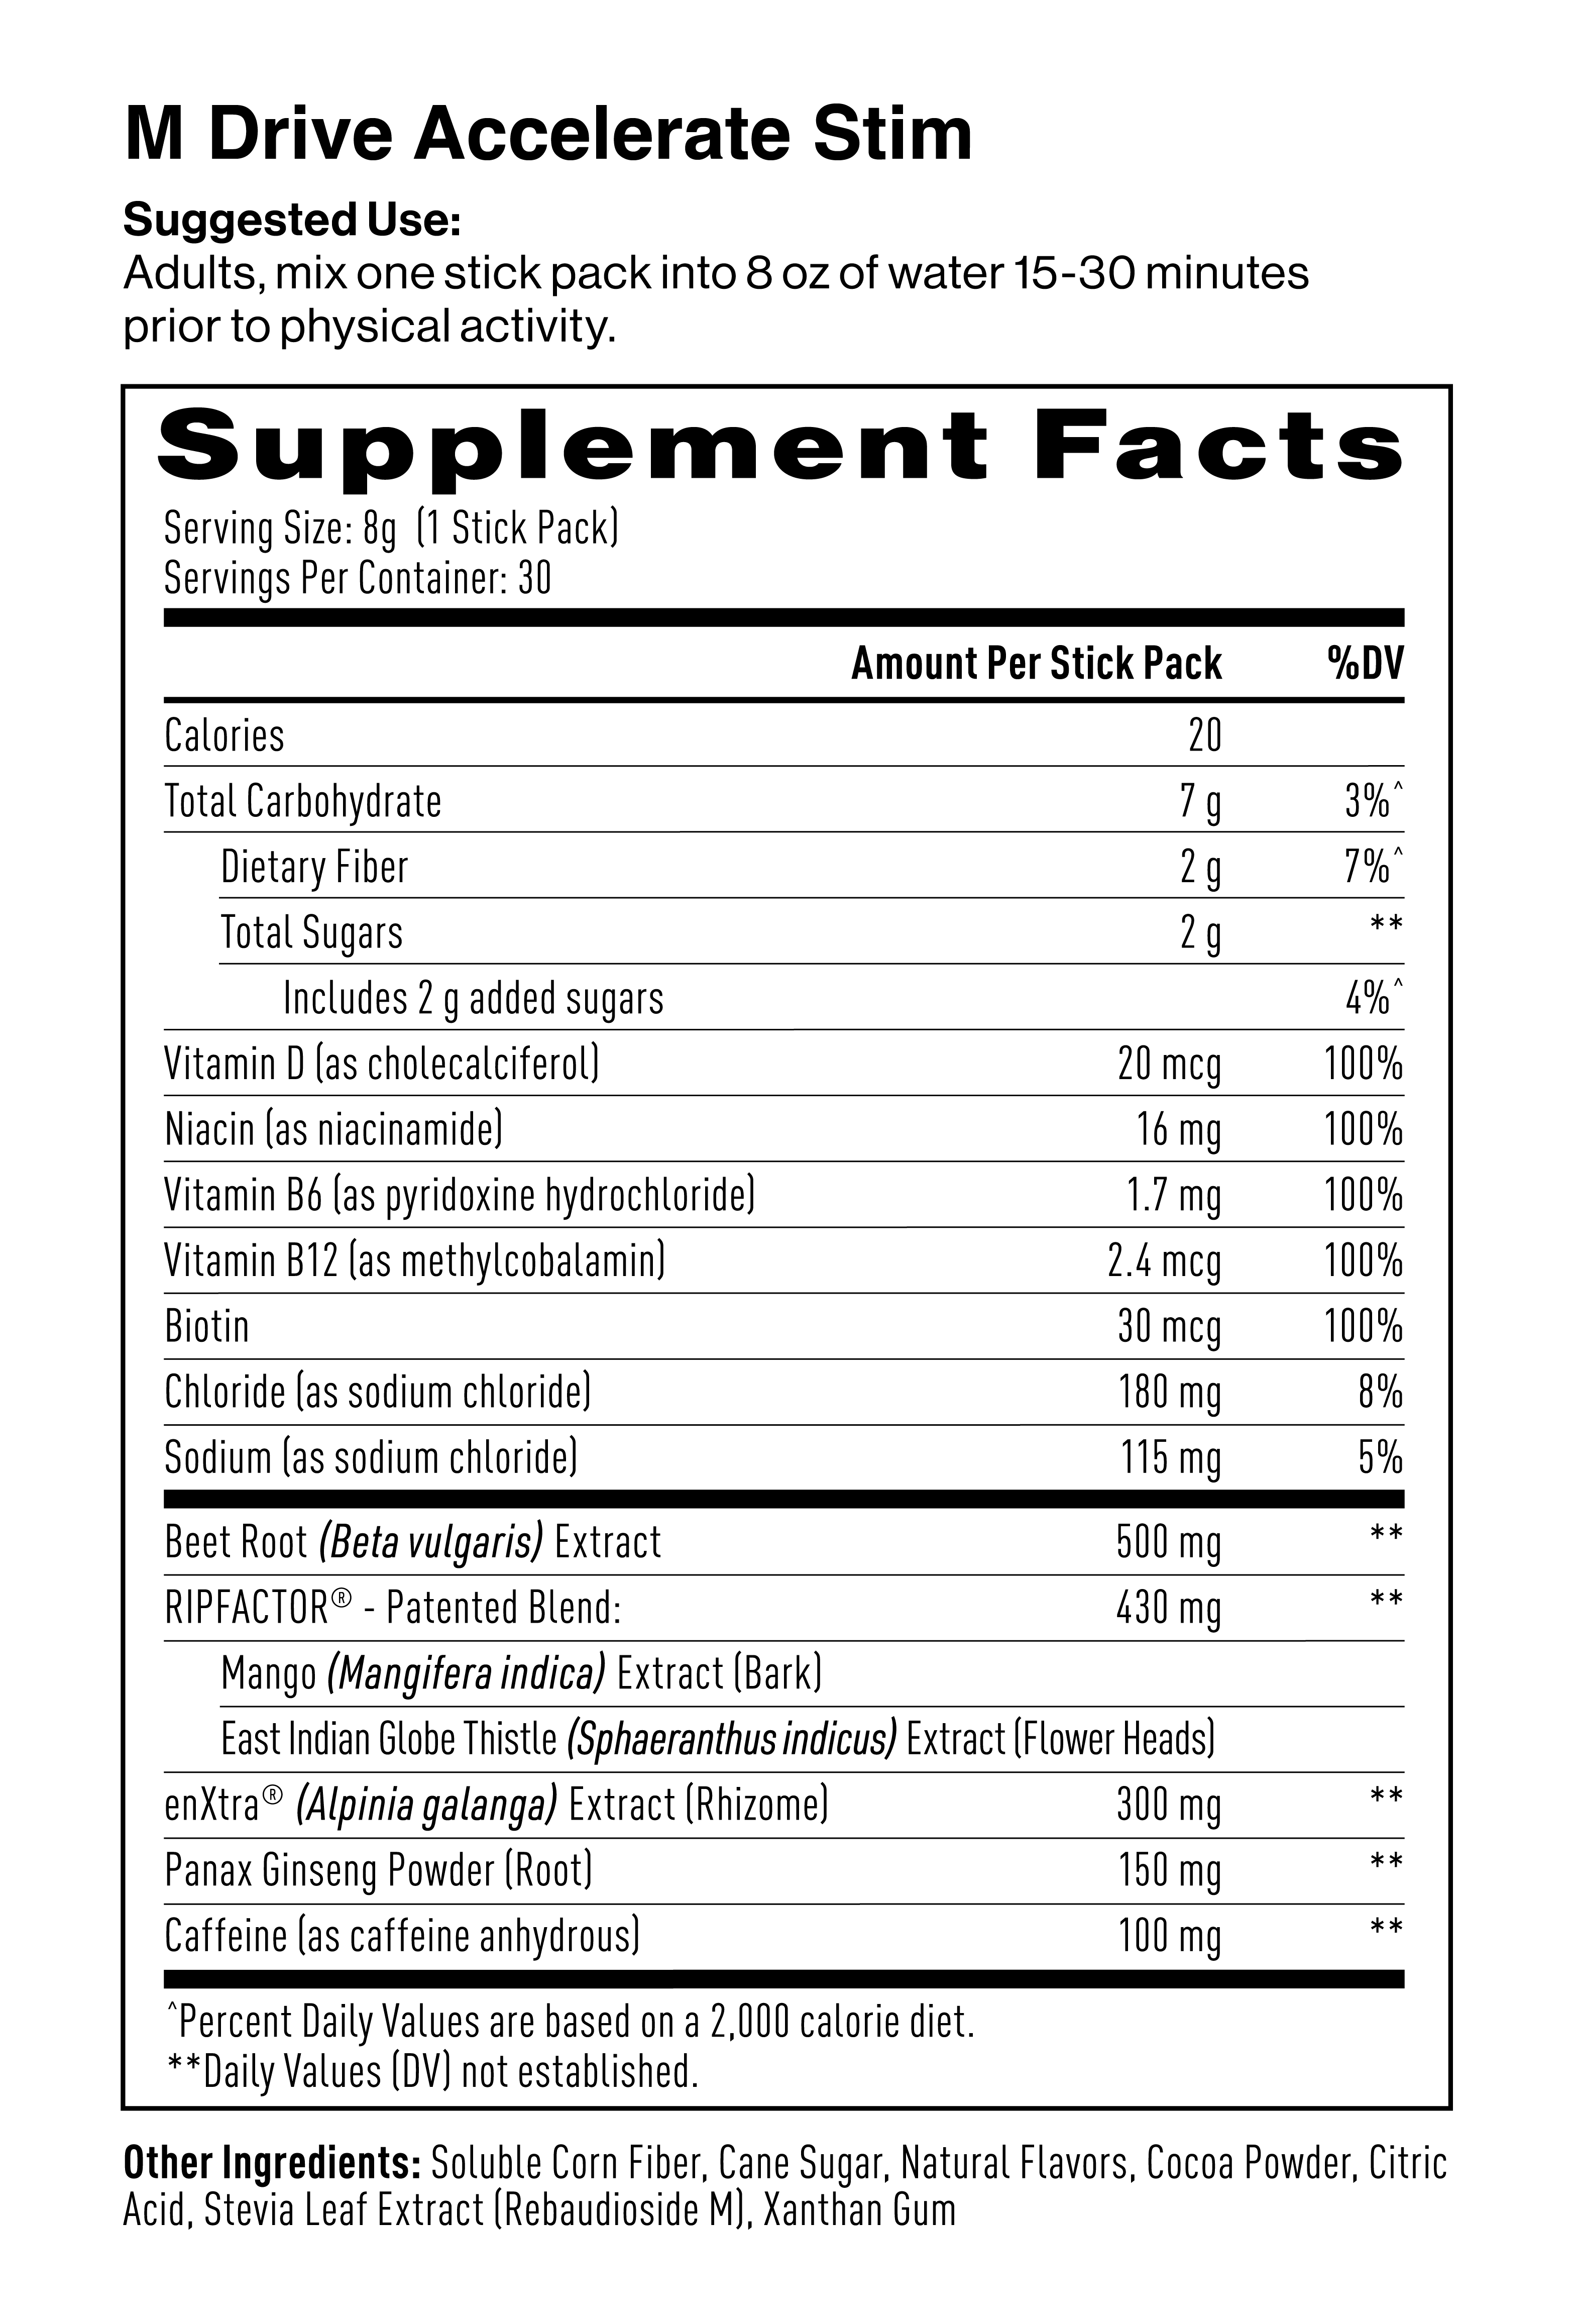 M Drive Accelerate Stim Supplement Facts & Ingredients: Soluble Corn Fiber, Cane Sugar, Natural Mixed Berry Flavor, Beet Root Extract, RipFACTOR, Cocoa Powder, Sodium Chloride, EnXtra, Citric Acid, Panax Ginseng (root) Powder, Reb A (sweetener), Caffeine, Xanthan Gum Powder, Niacinamide, Vitamin B6, Biotin, Vitamin D3, Vitamin B12